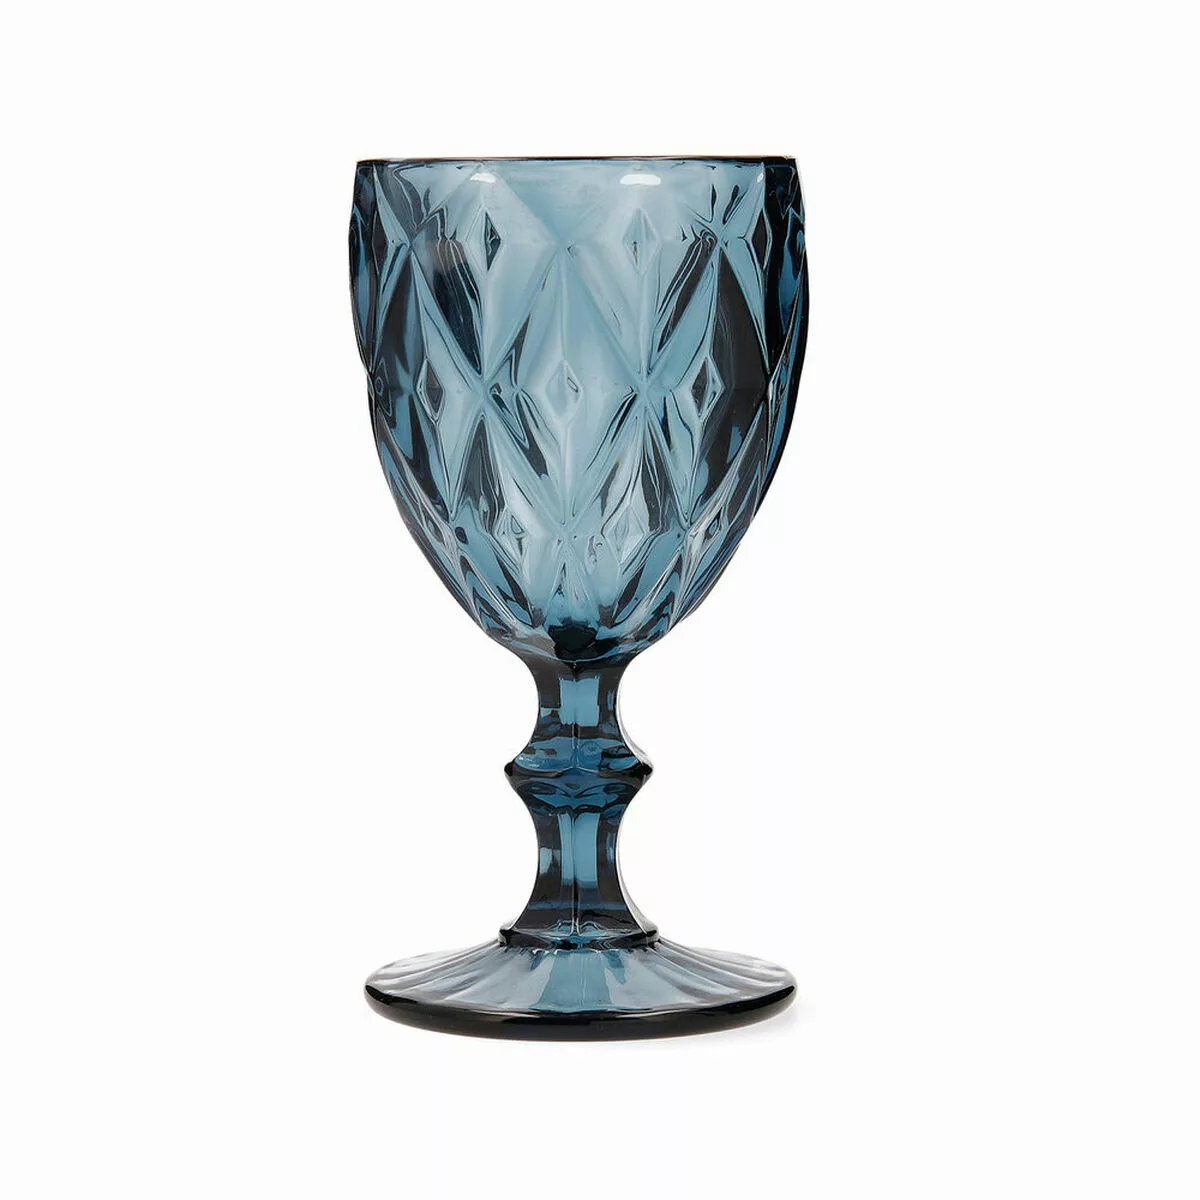 Weinglas Bidasoa Ikonic Blau 240 Ml 6 Stücke günstig online kaufen